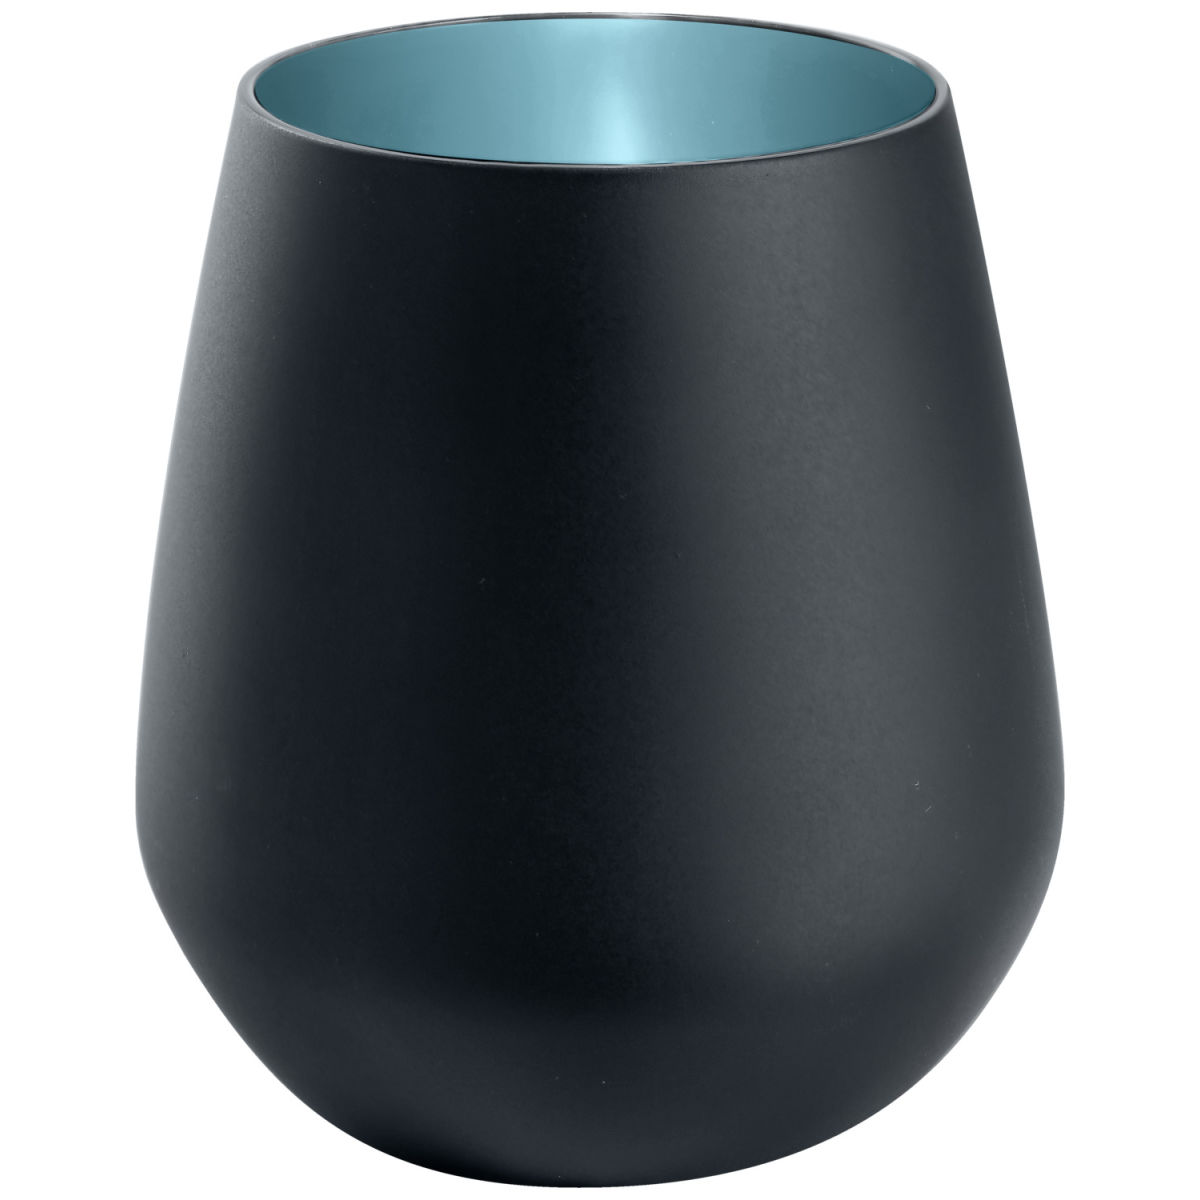 Vega Waterglas Aolani; 420ml, 6.5x10 cm (ØxH); zwart/turquoise; 6 stuk / verpakking